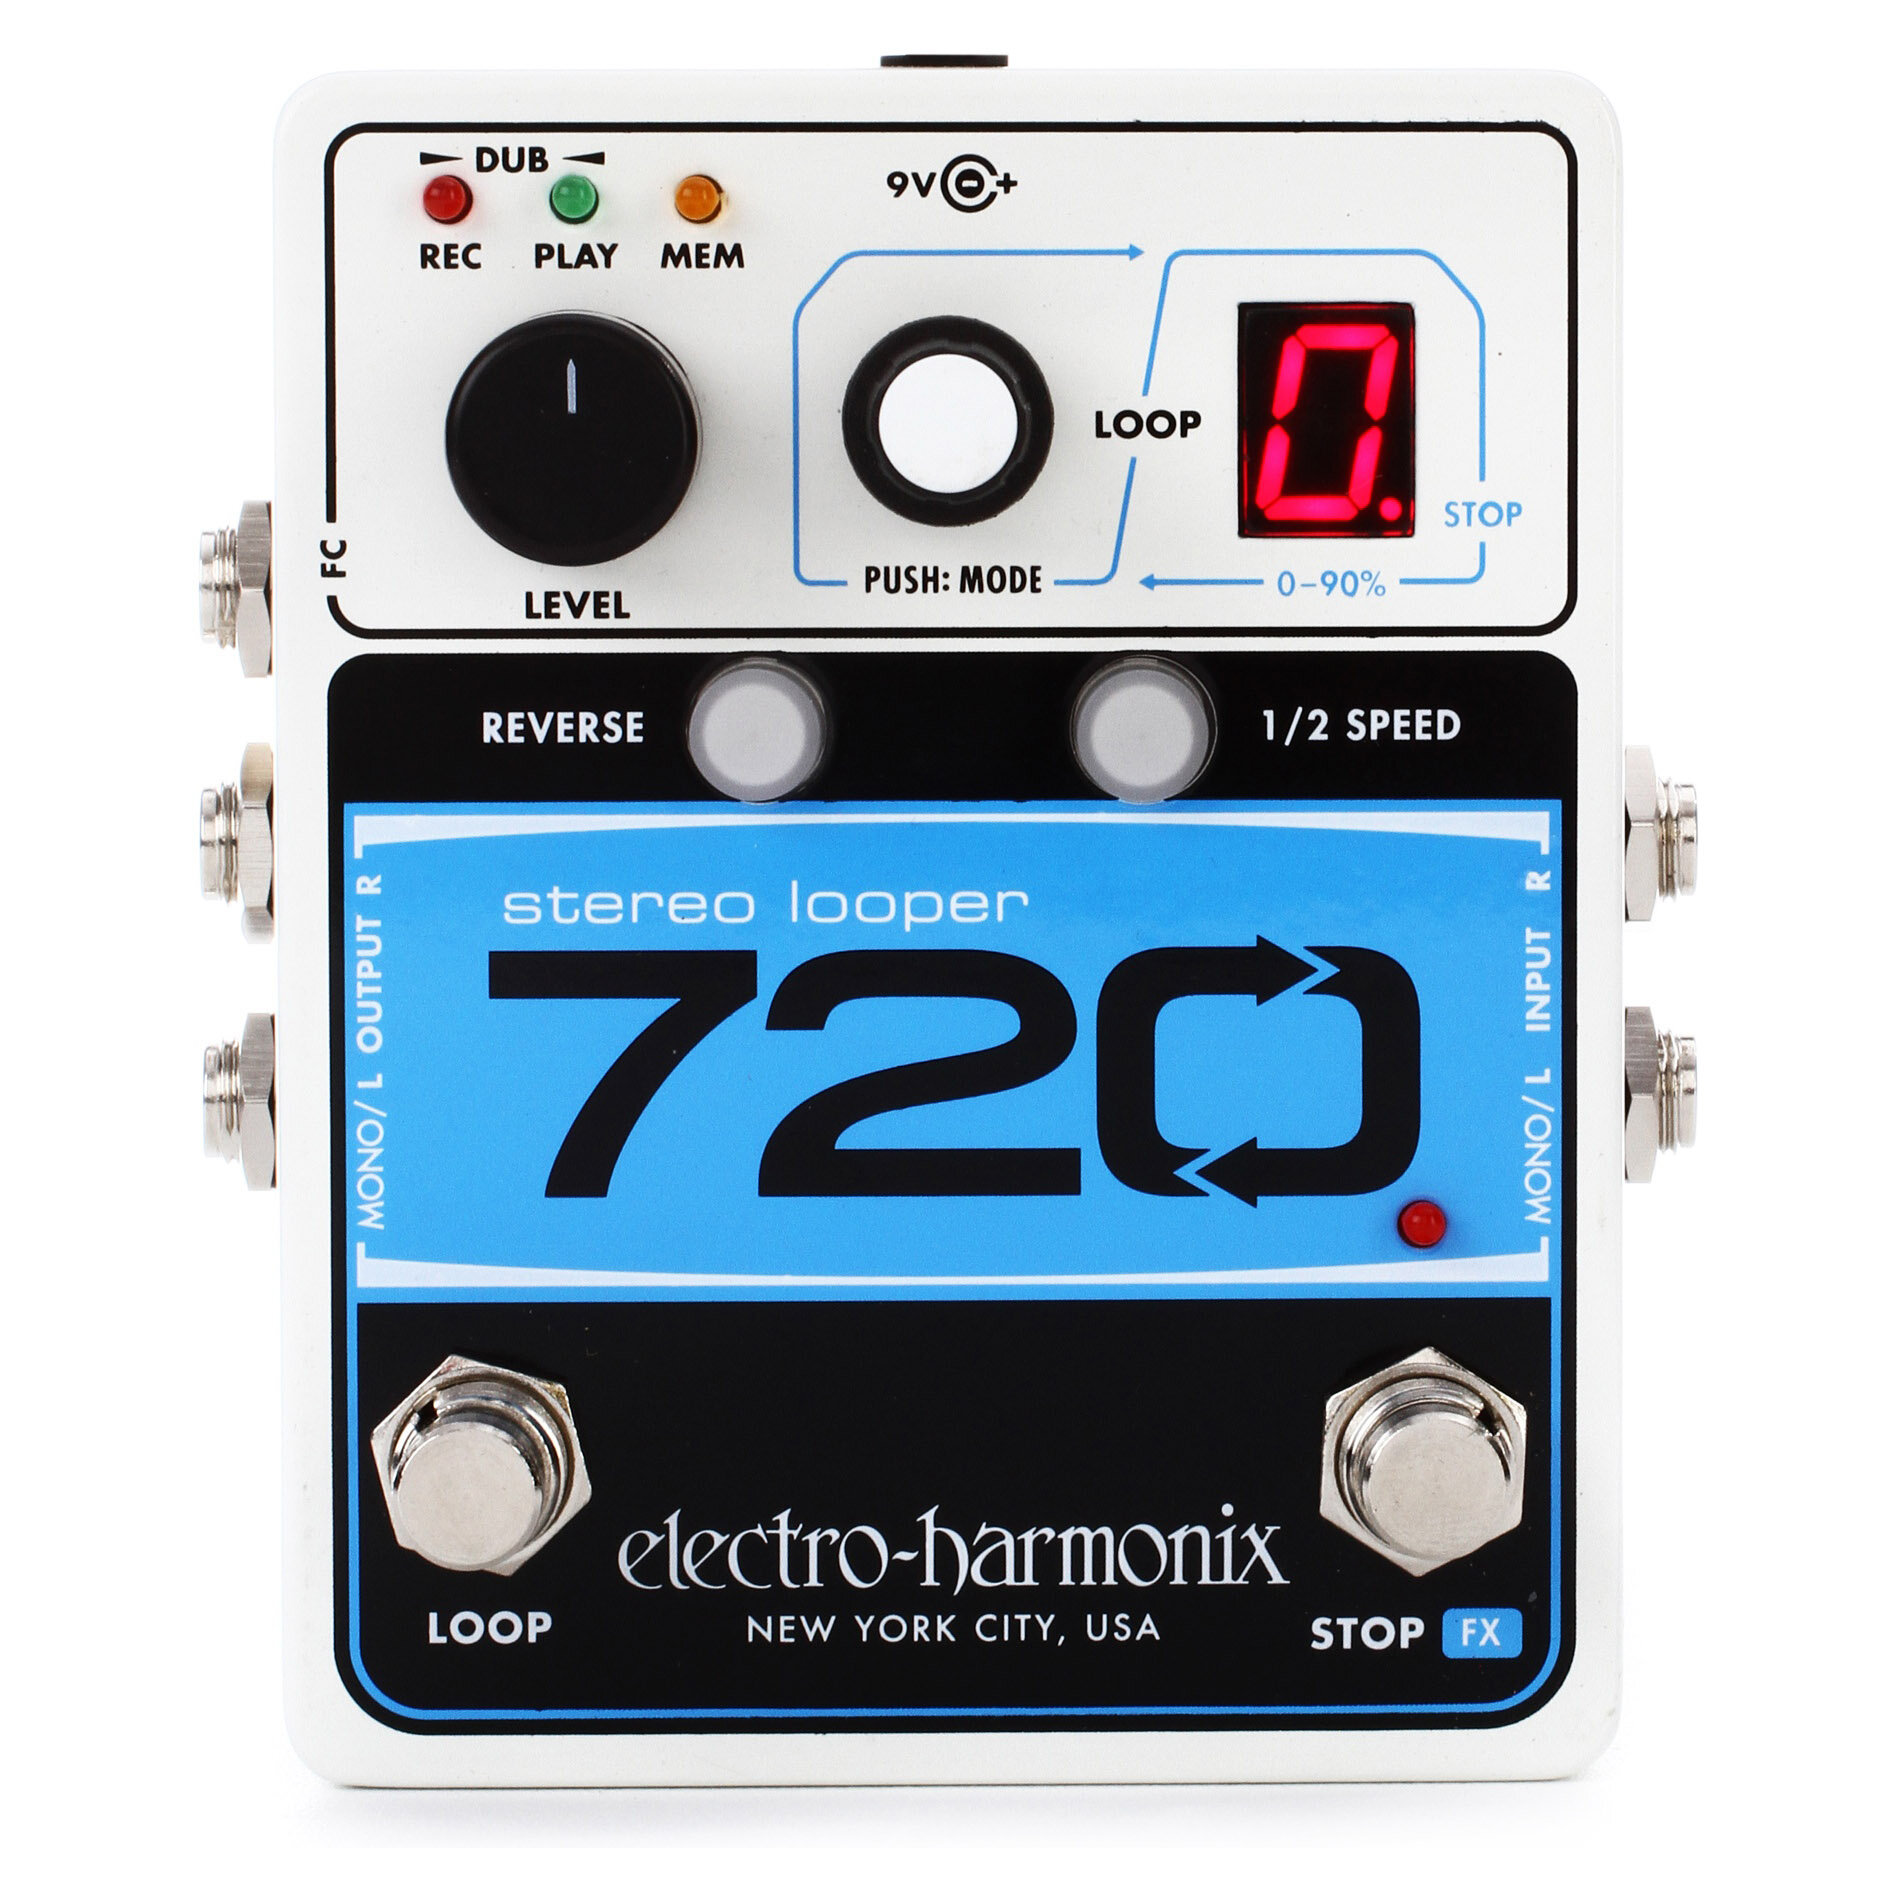 Electro-Harmonix (EHX) 720 Stereo Looper